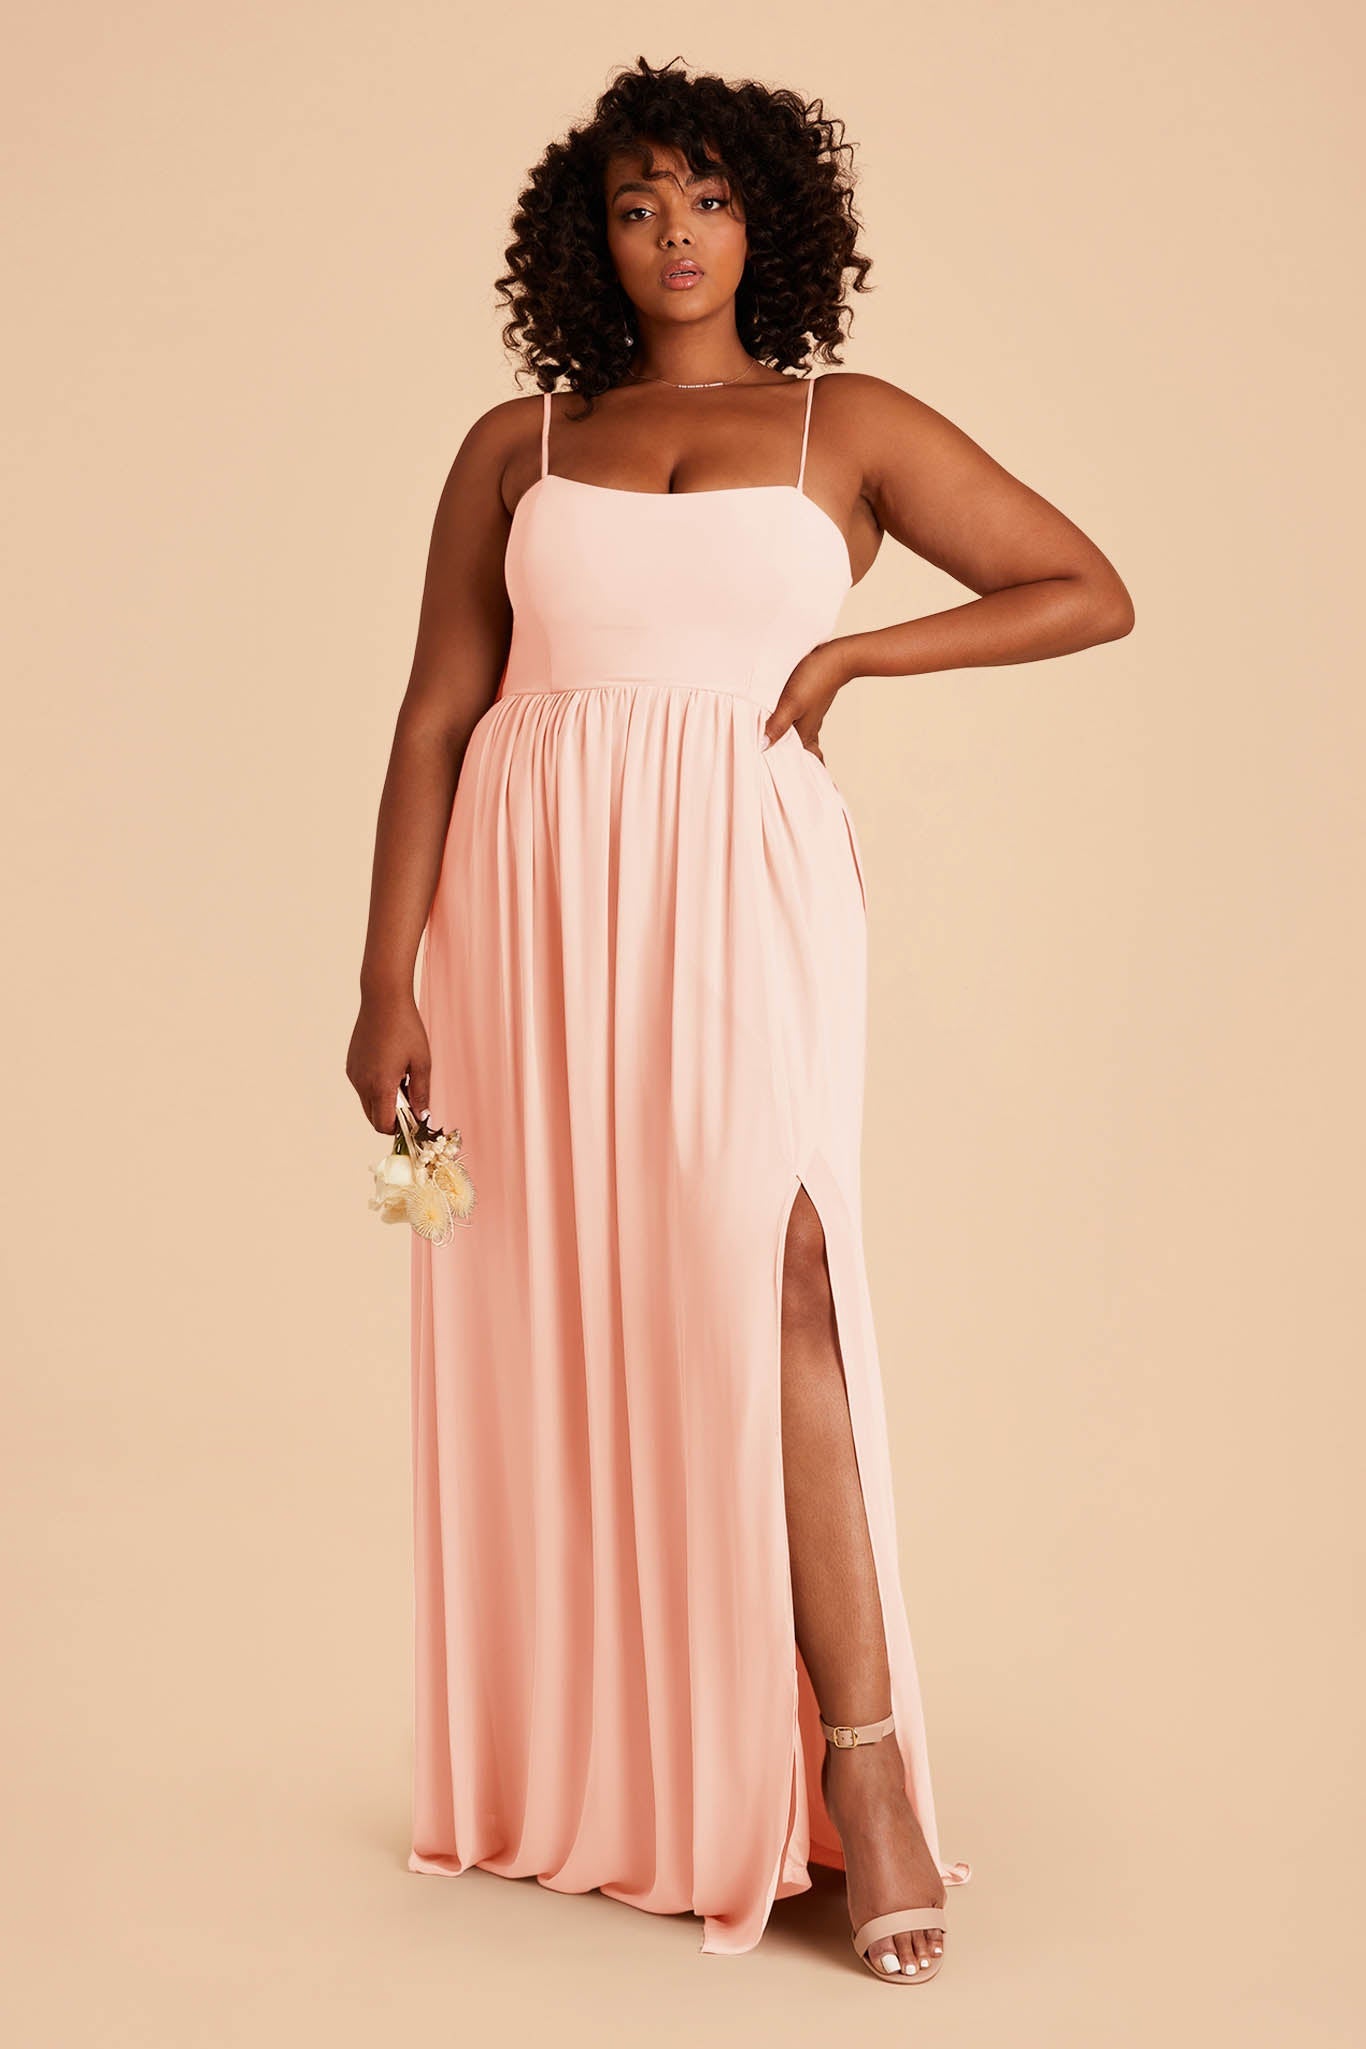 August Convertible Dress - Blush Pink